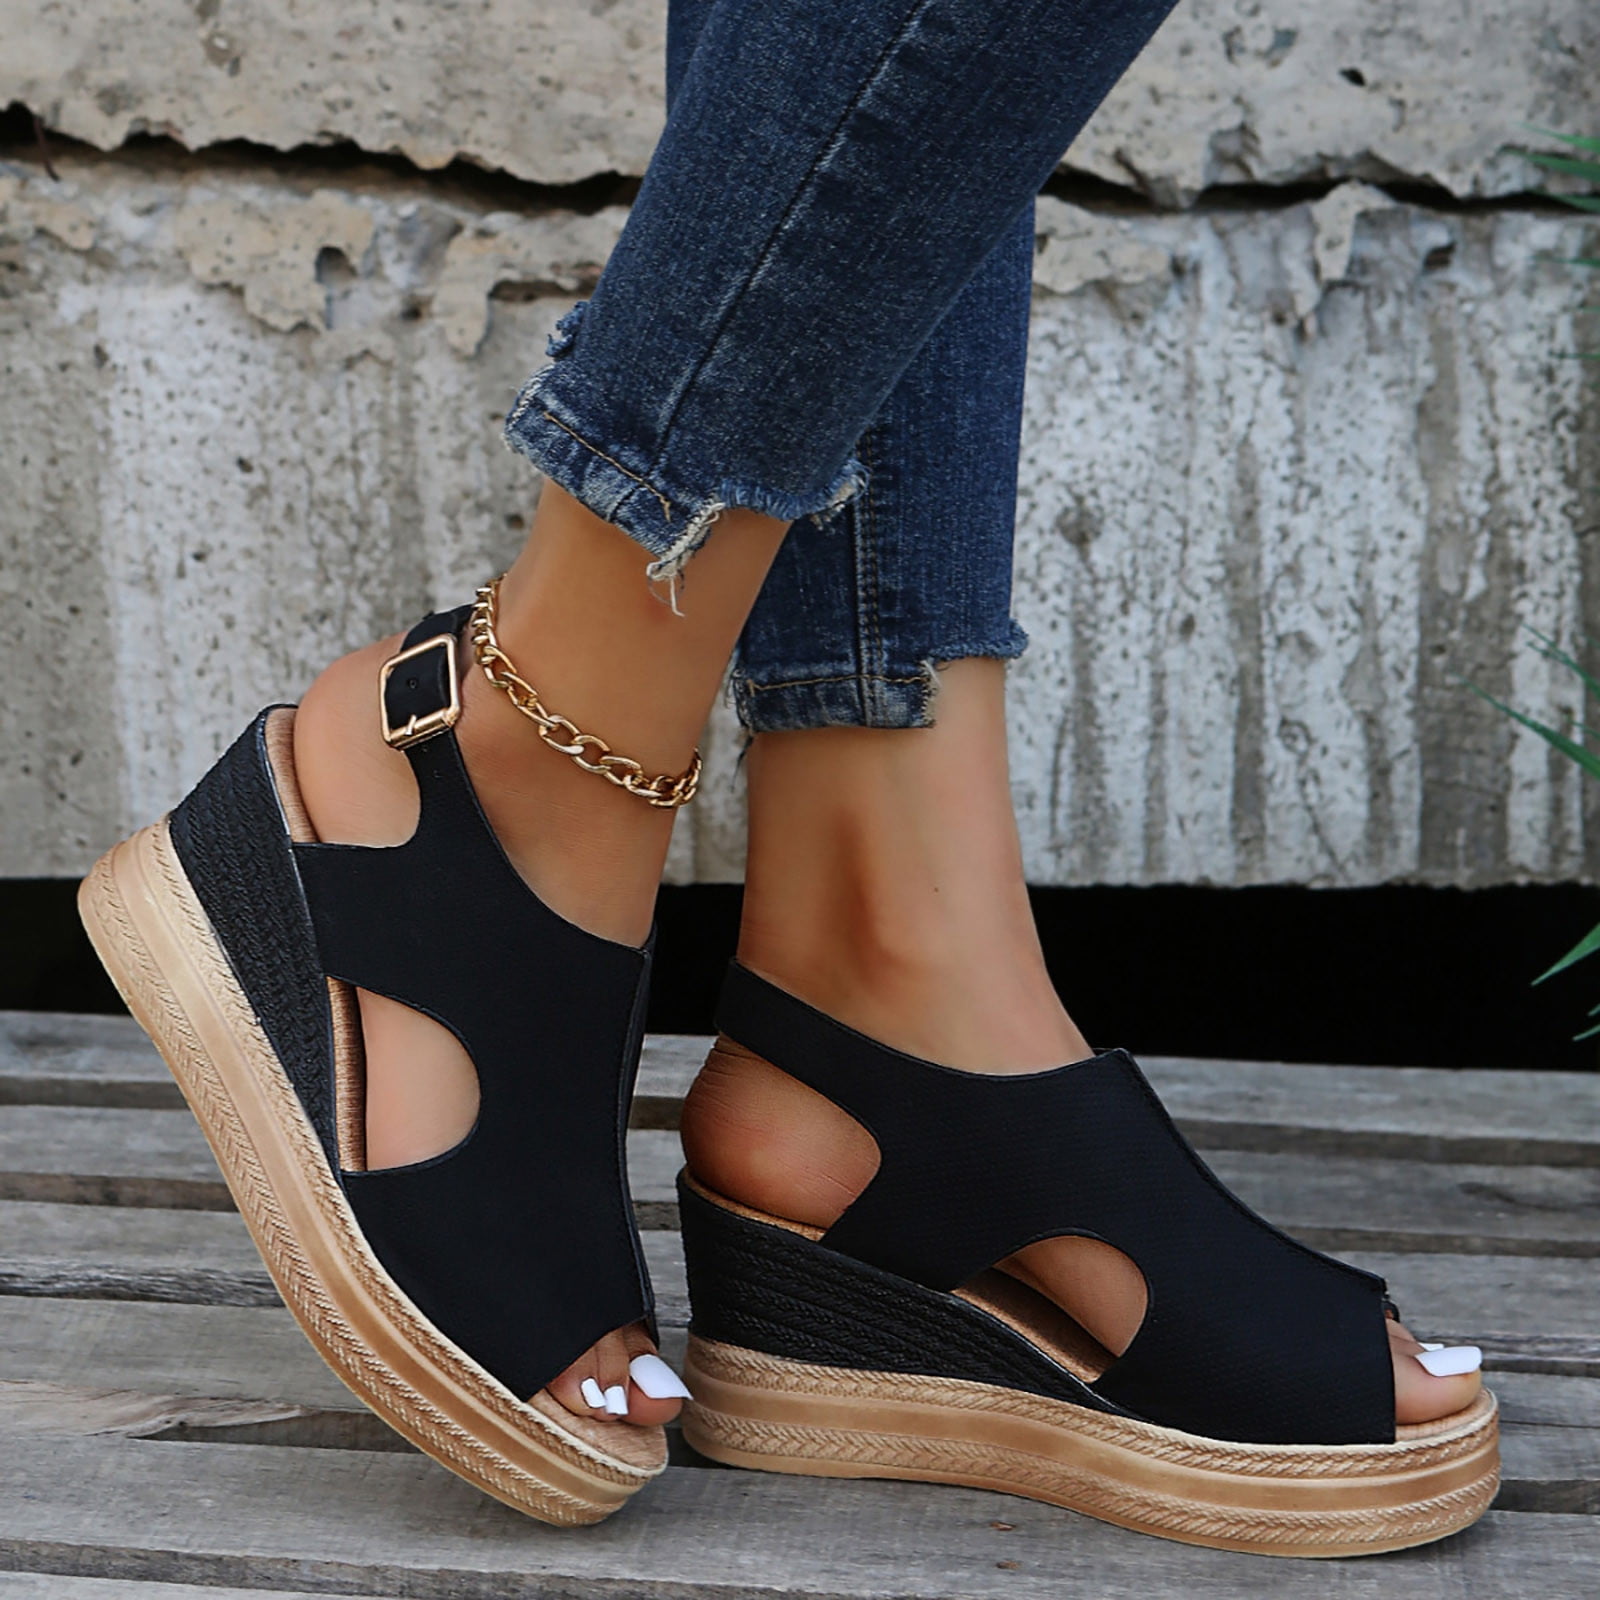 Guzom Woman Summer Sandals Clearance Comfort Flatform Wedge Sandals New ...